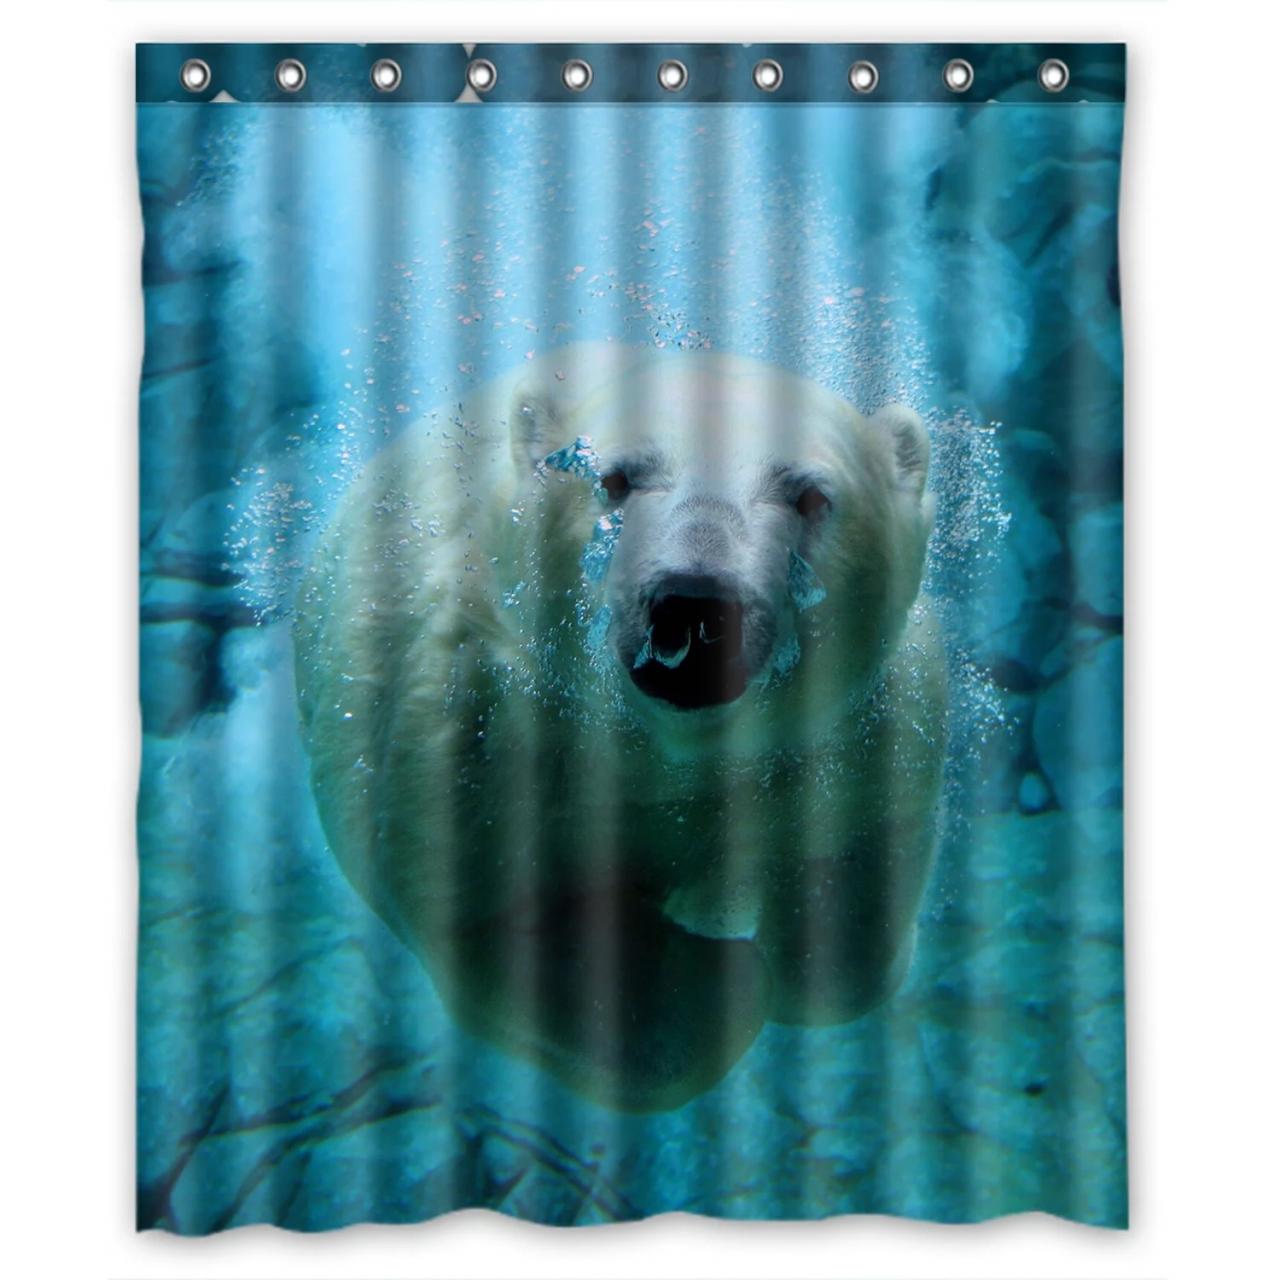 ZKGK Polar Bears Waterproof Shower Curtain Bathroom Decor Sets with